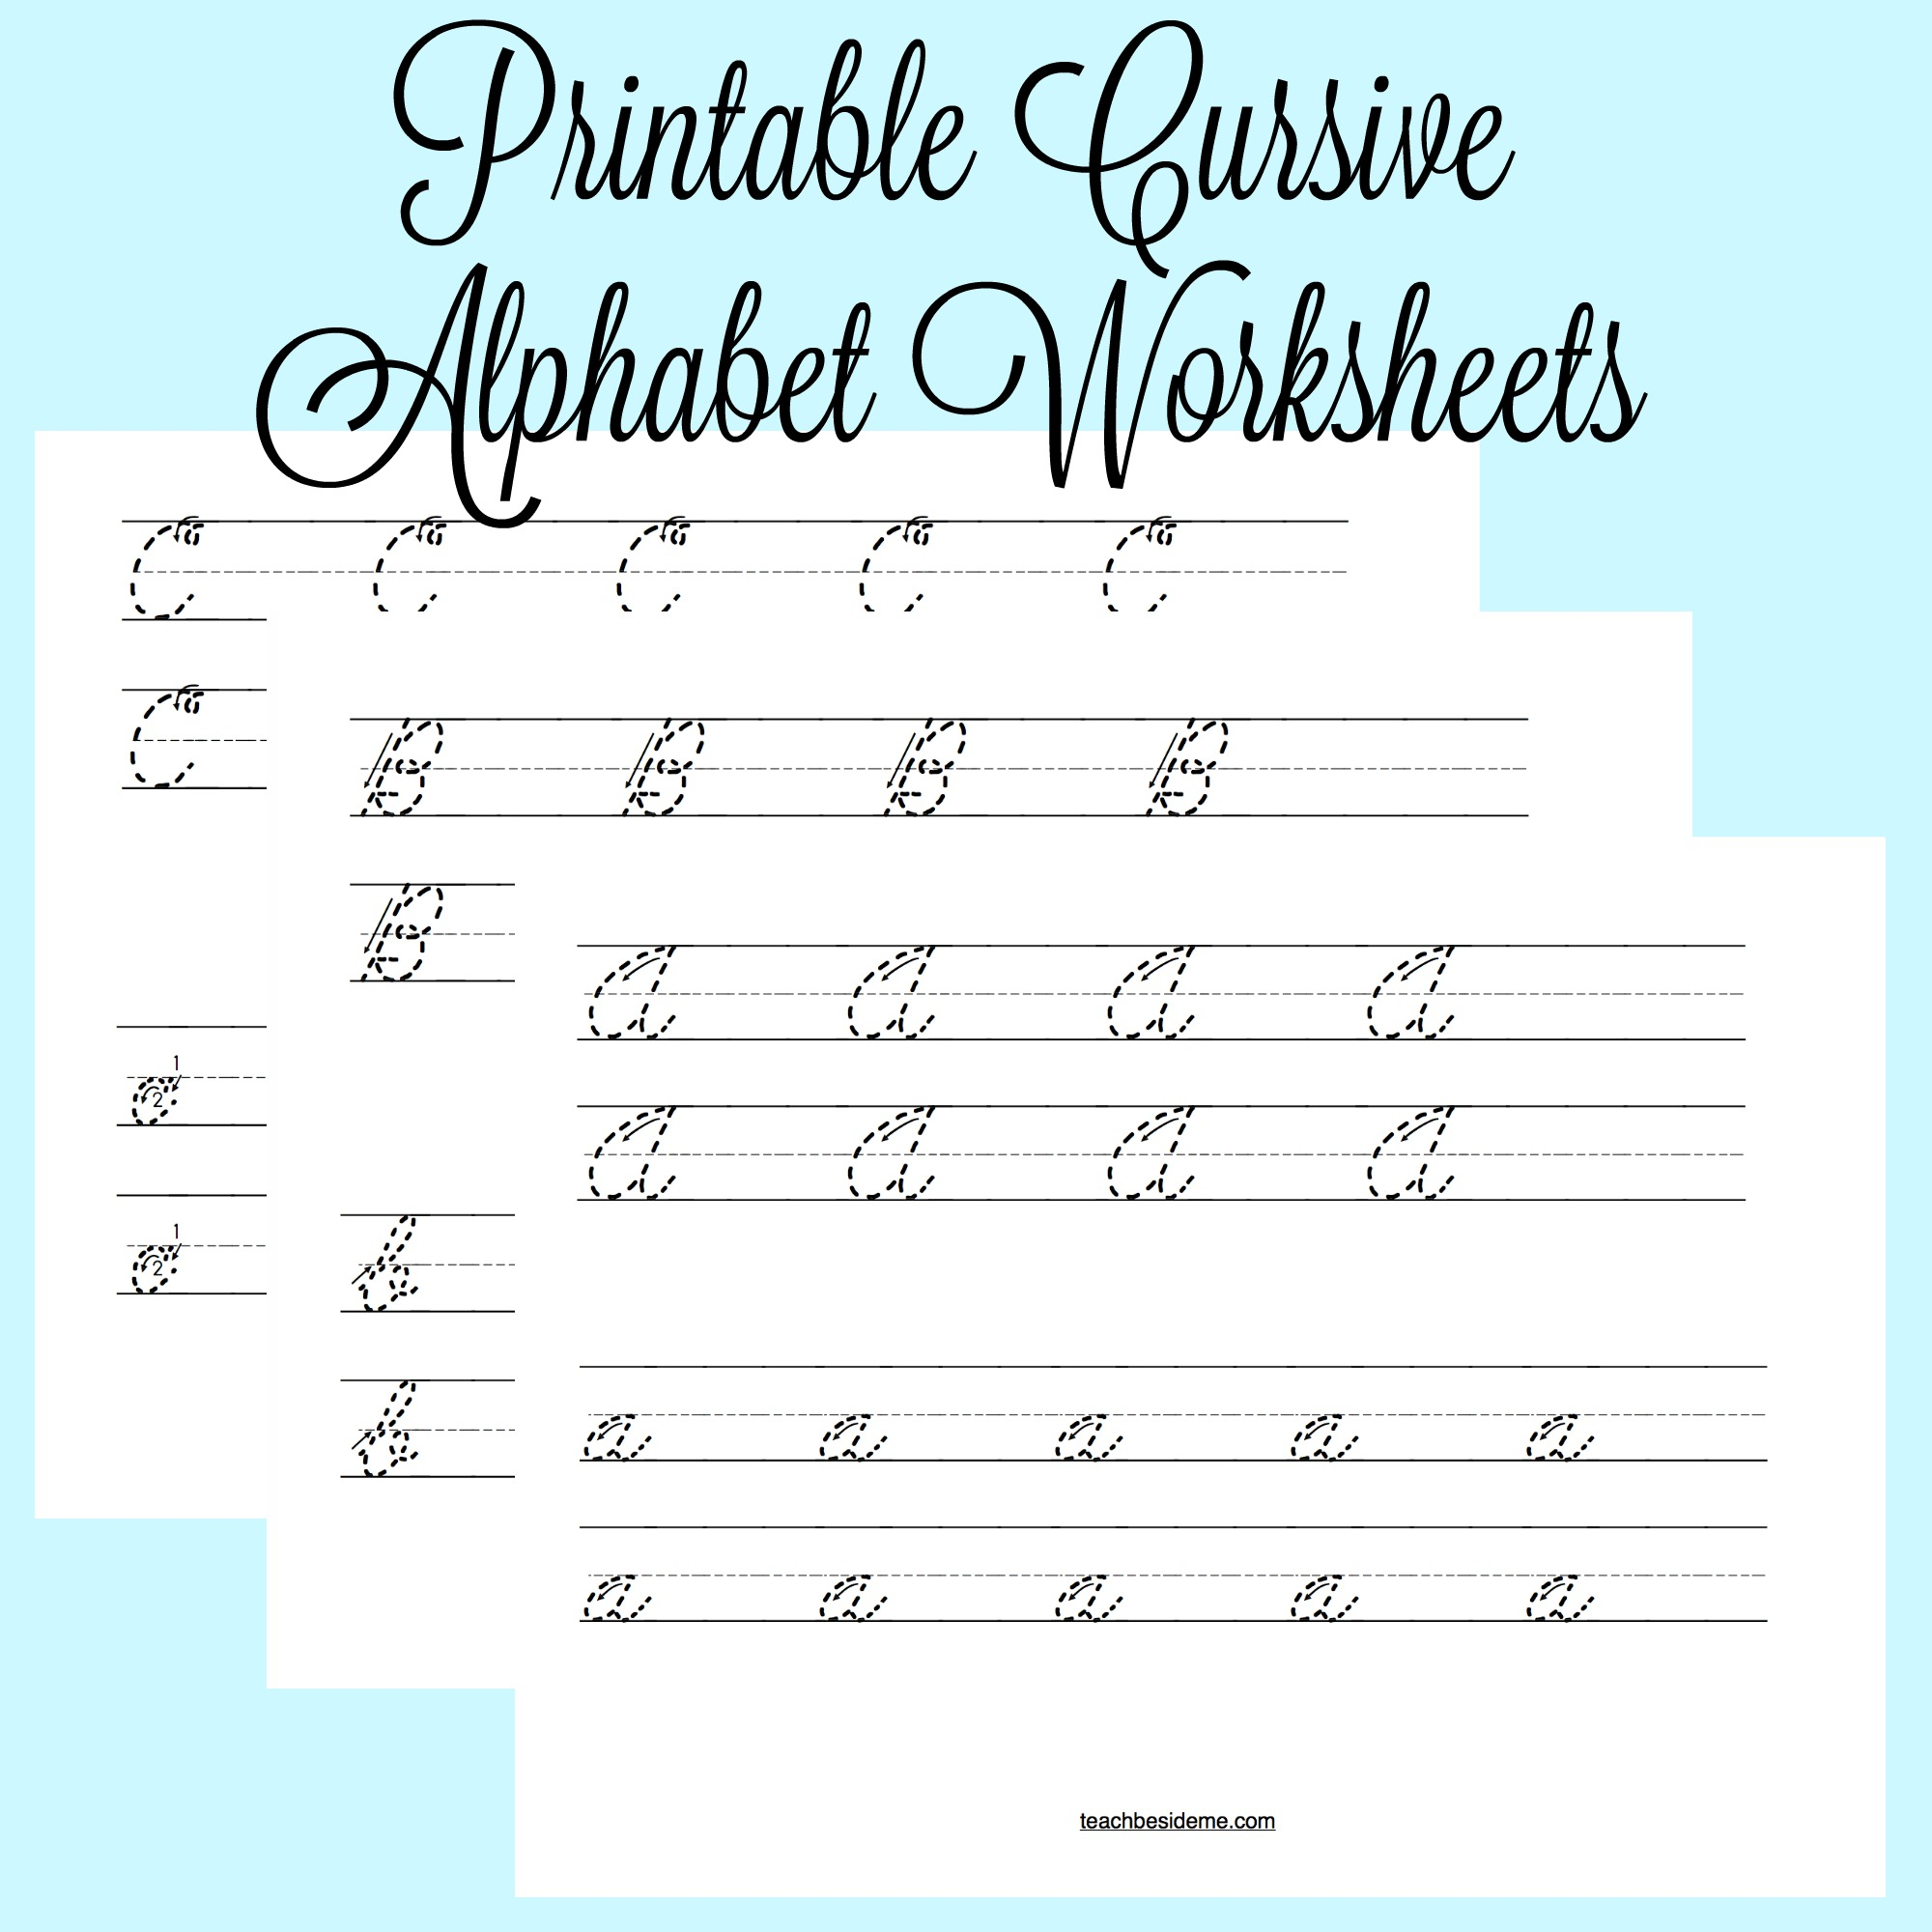 cursive-writing-chart-printable-worksheets-alyssamilanoblog-smileav